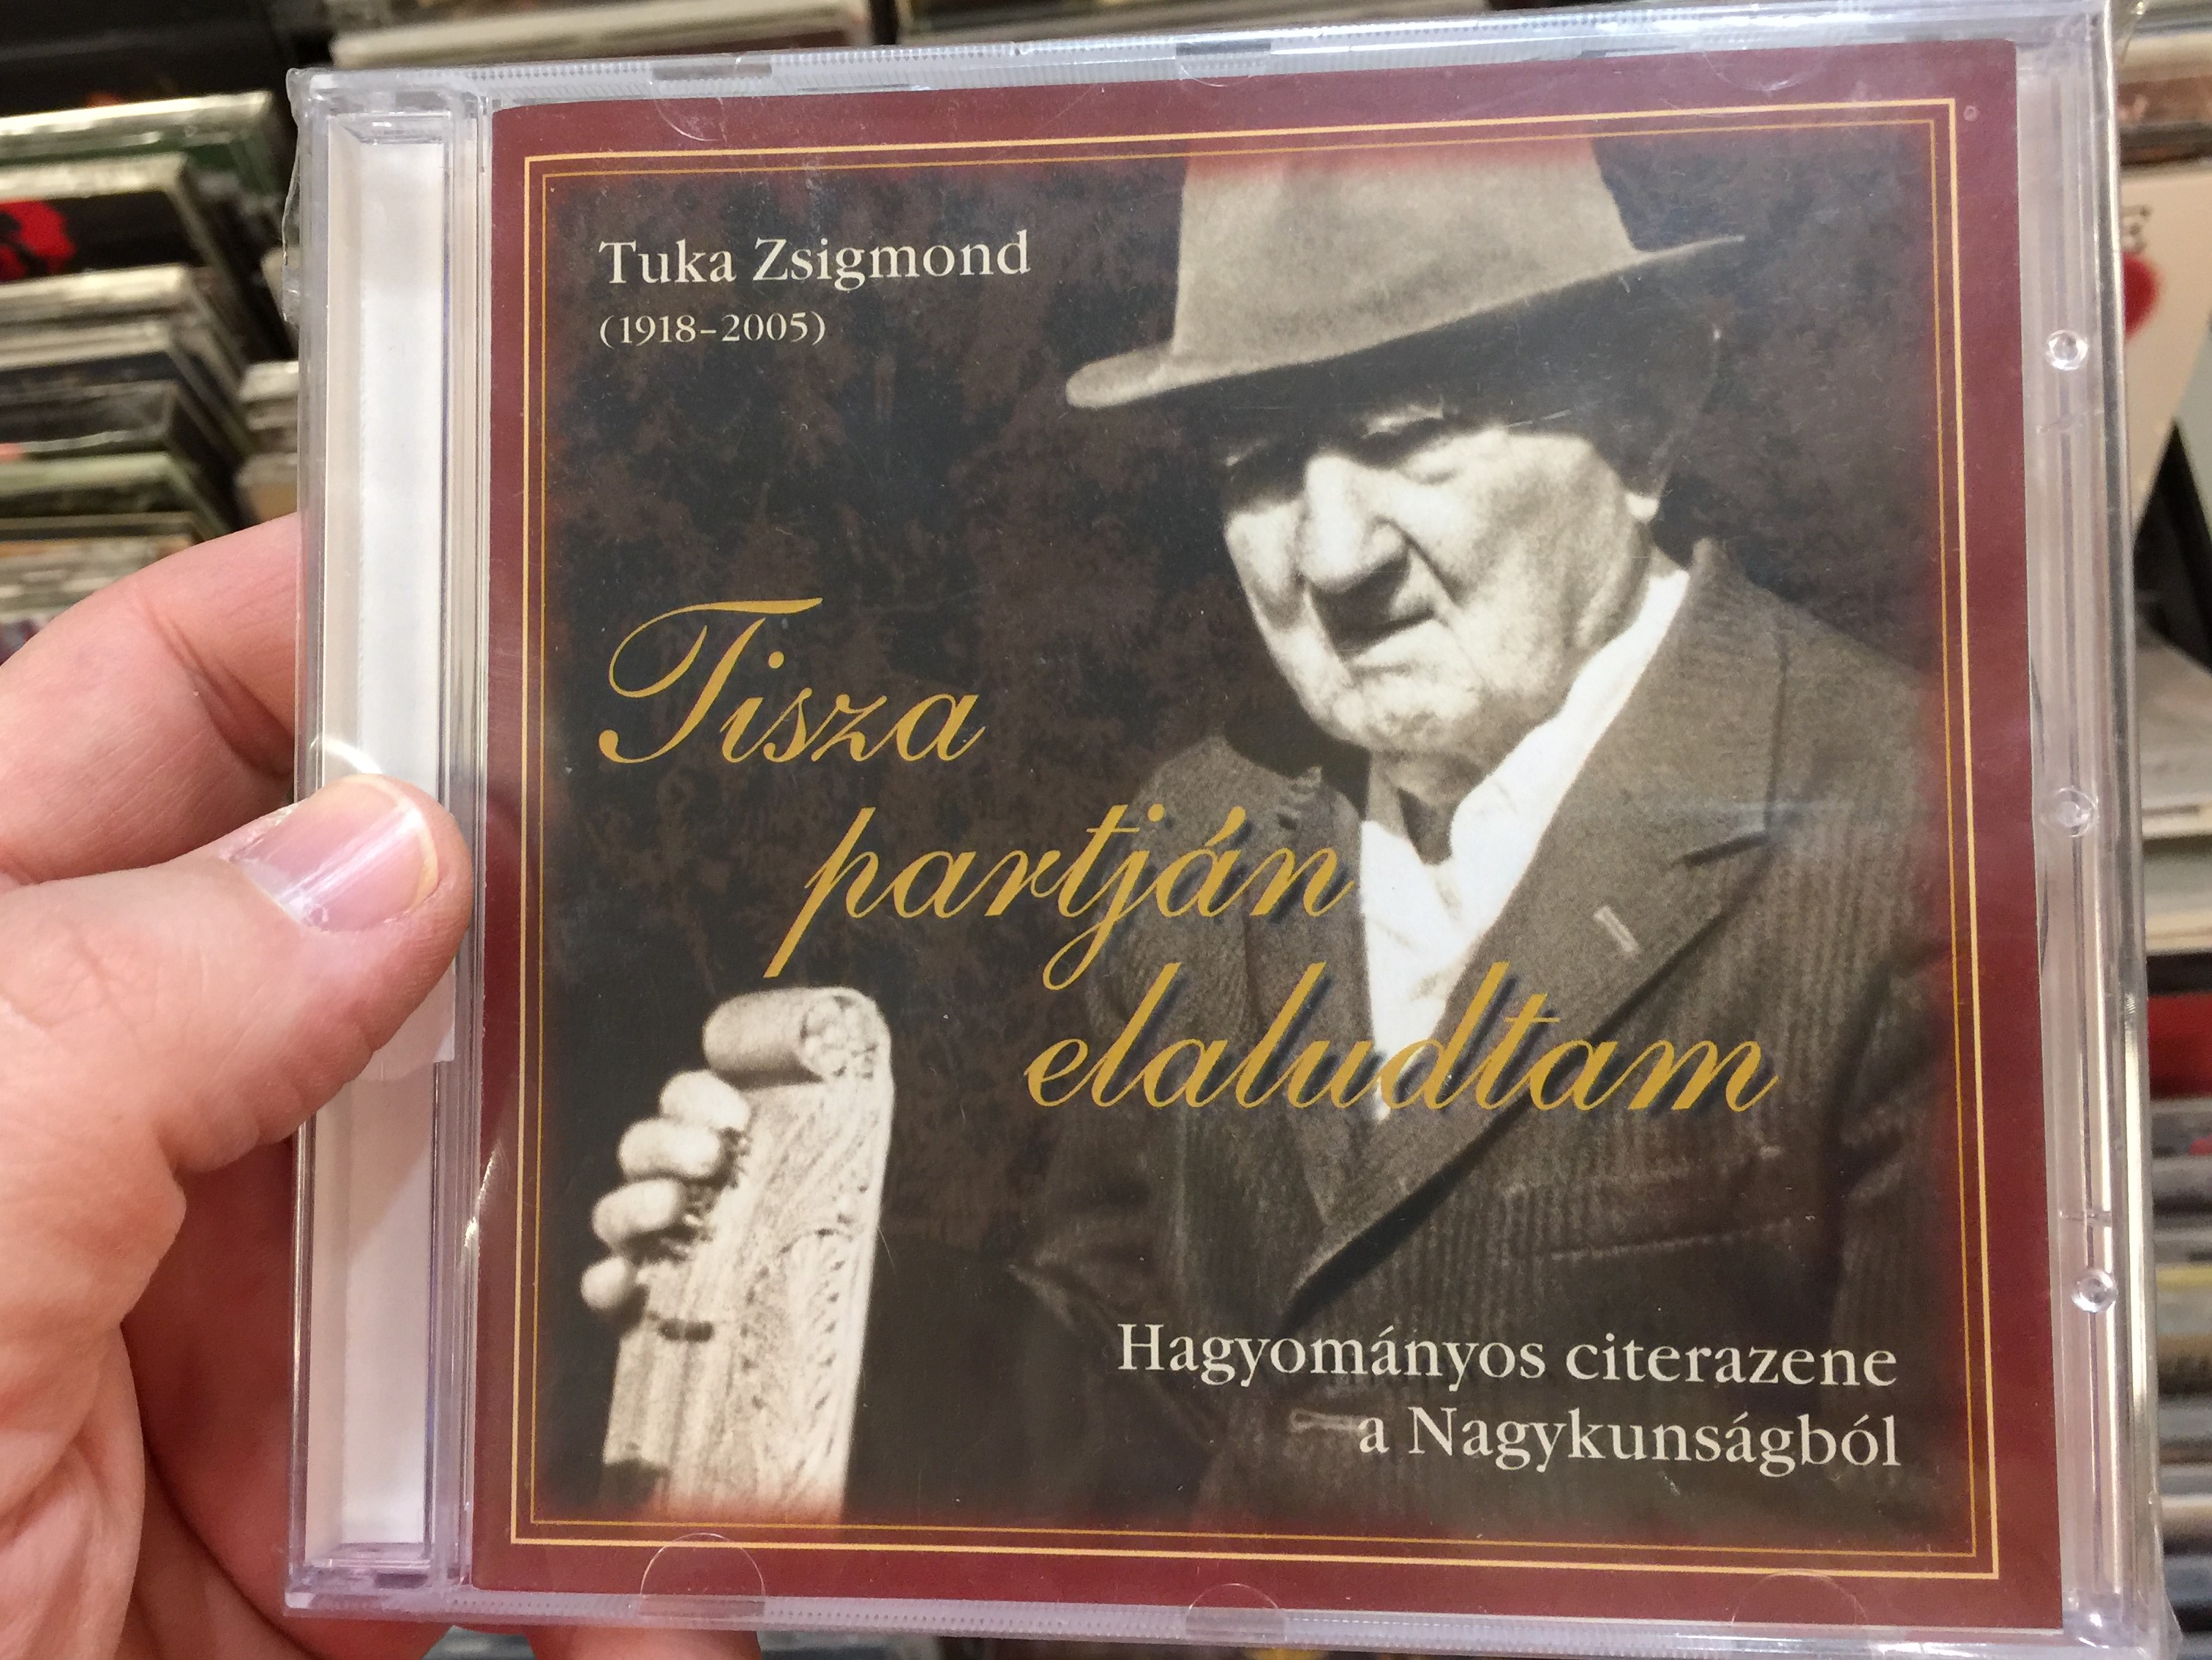 tuka-zsigmond-1918-2005-tisza-partjan-elaludtam-hagyomanyos-citerazene-a-nagykuns-gbol-balogh-songs-audio-cd-2018-bs-cd-28-1-.jpg